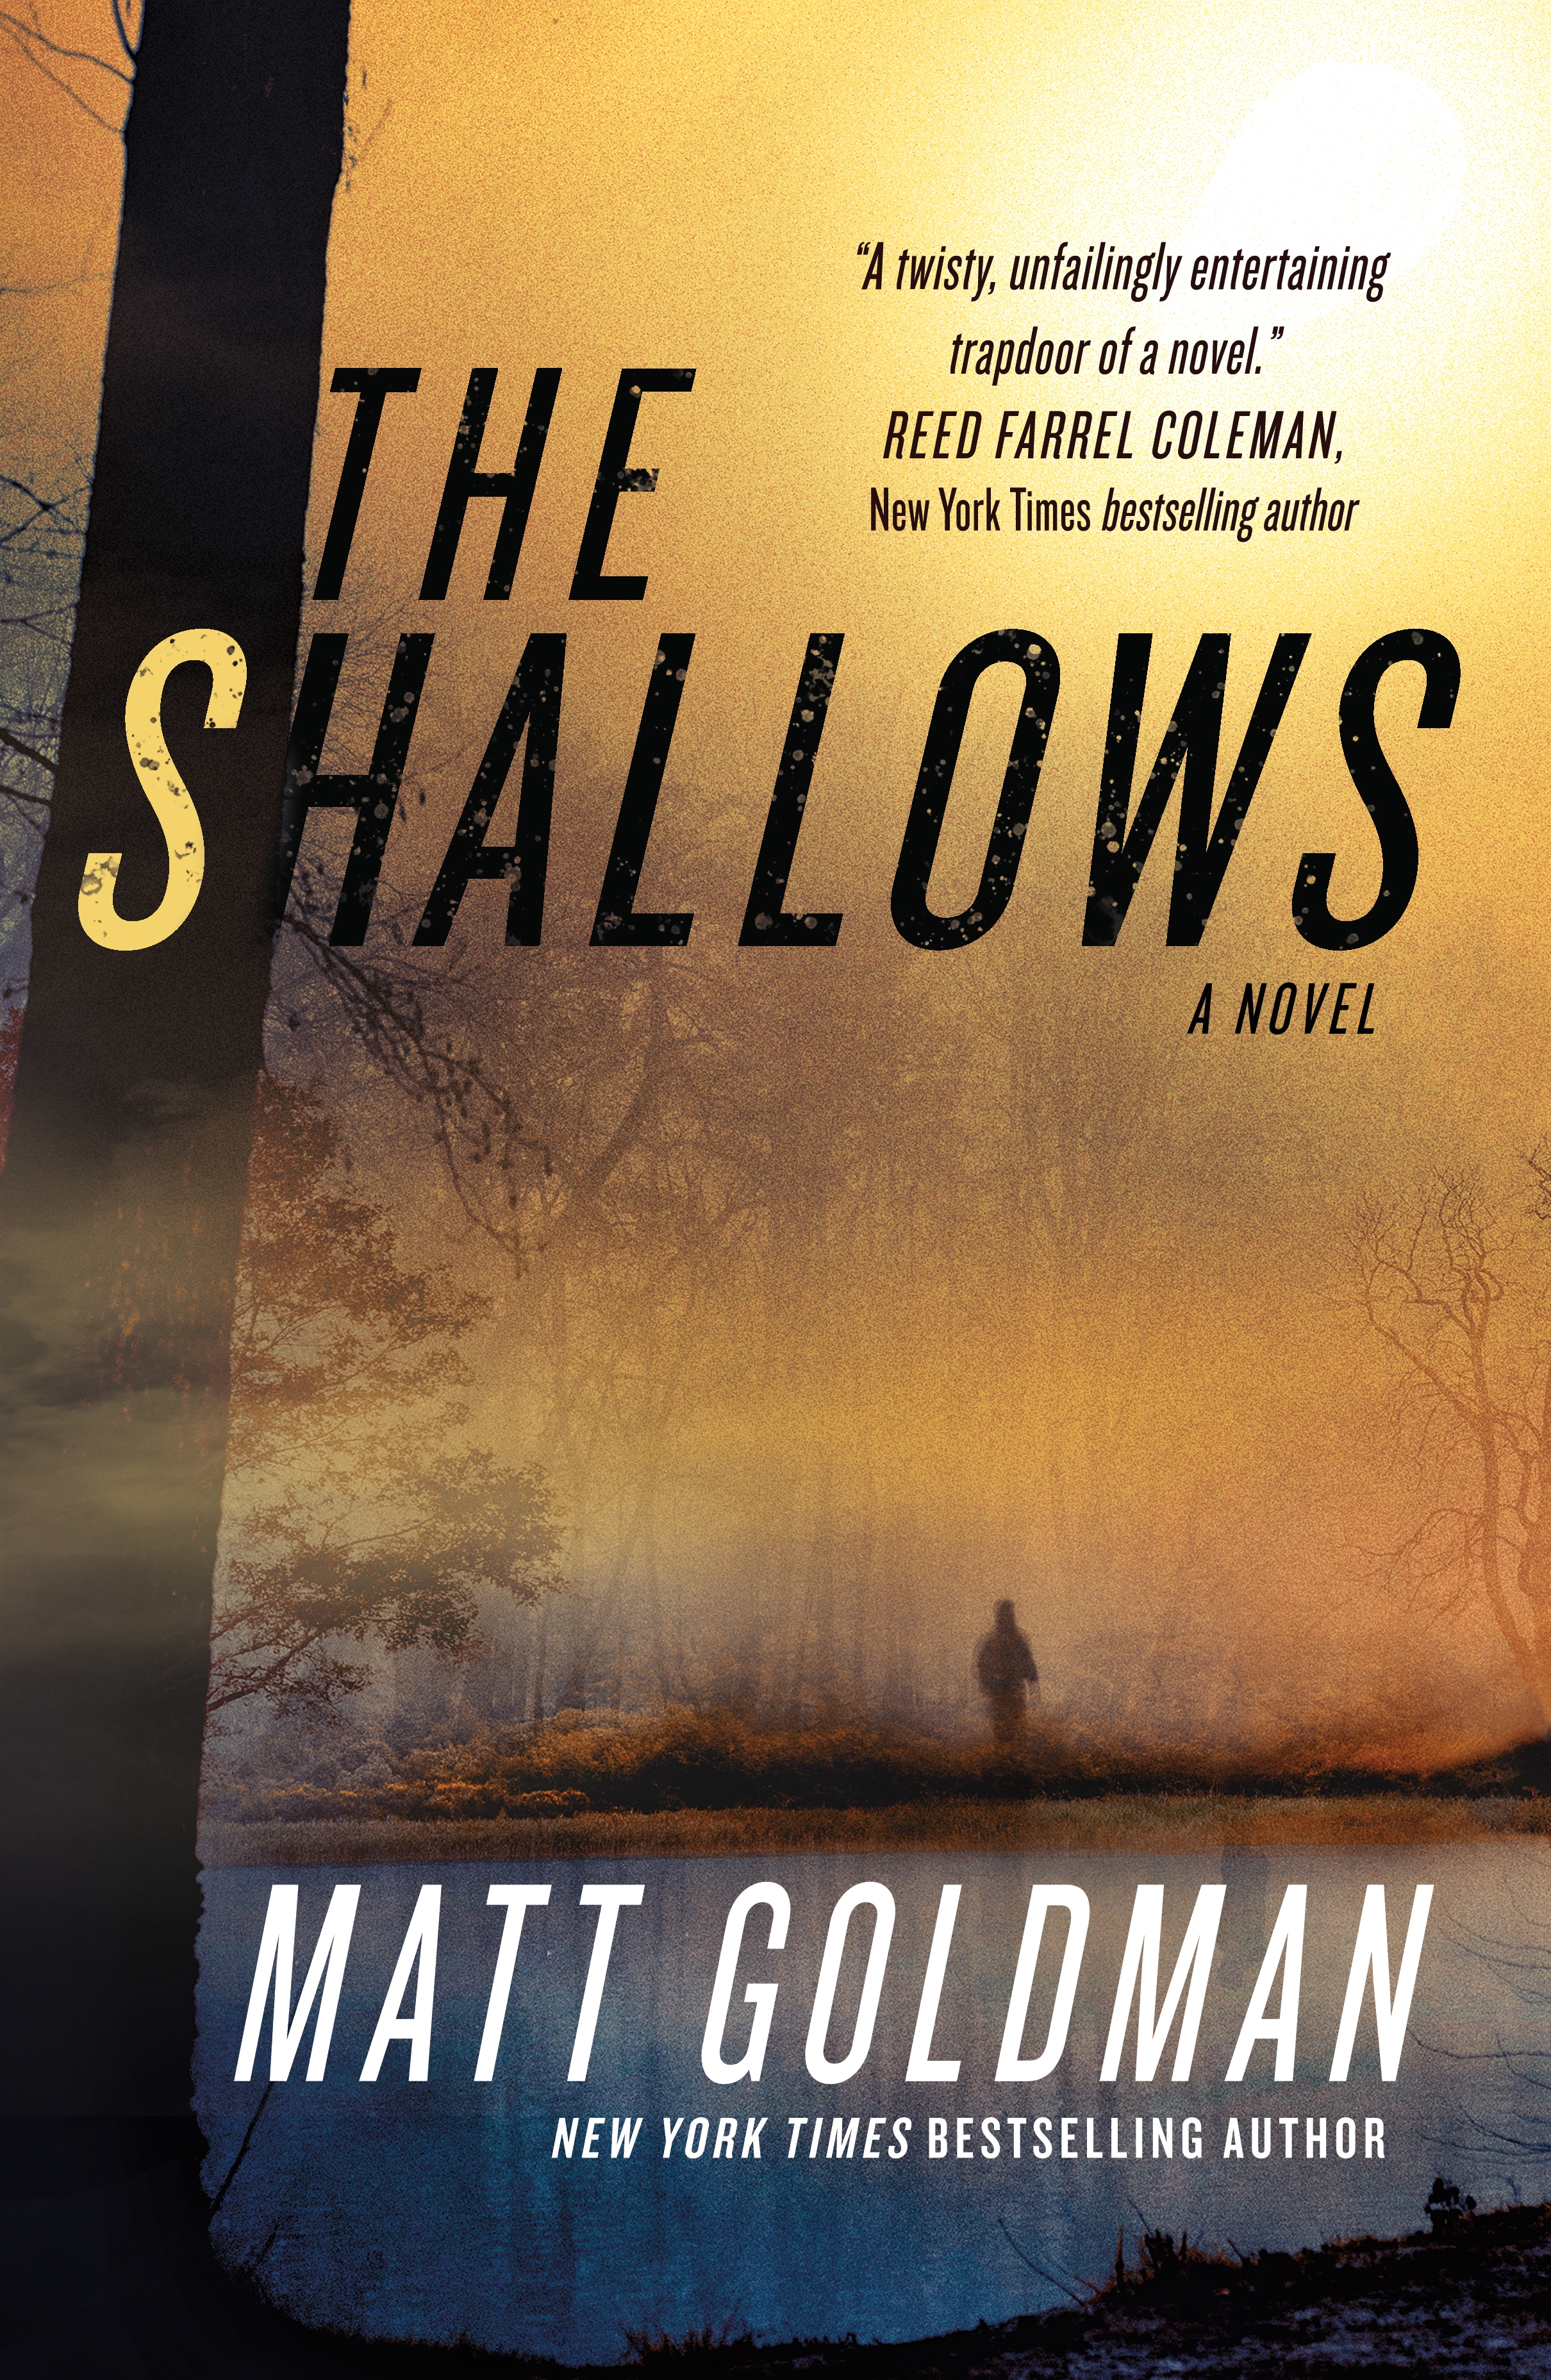 The Shallows : A Nils Shapiro Novel by Matt Goldman